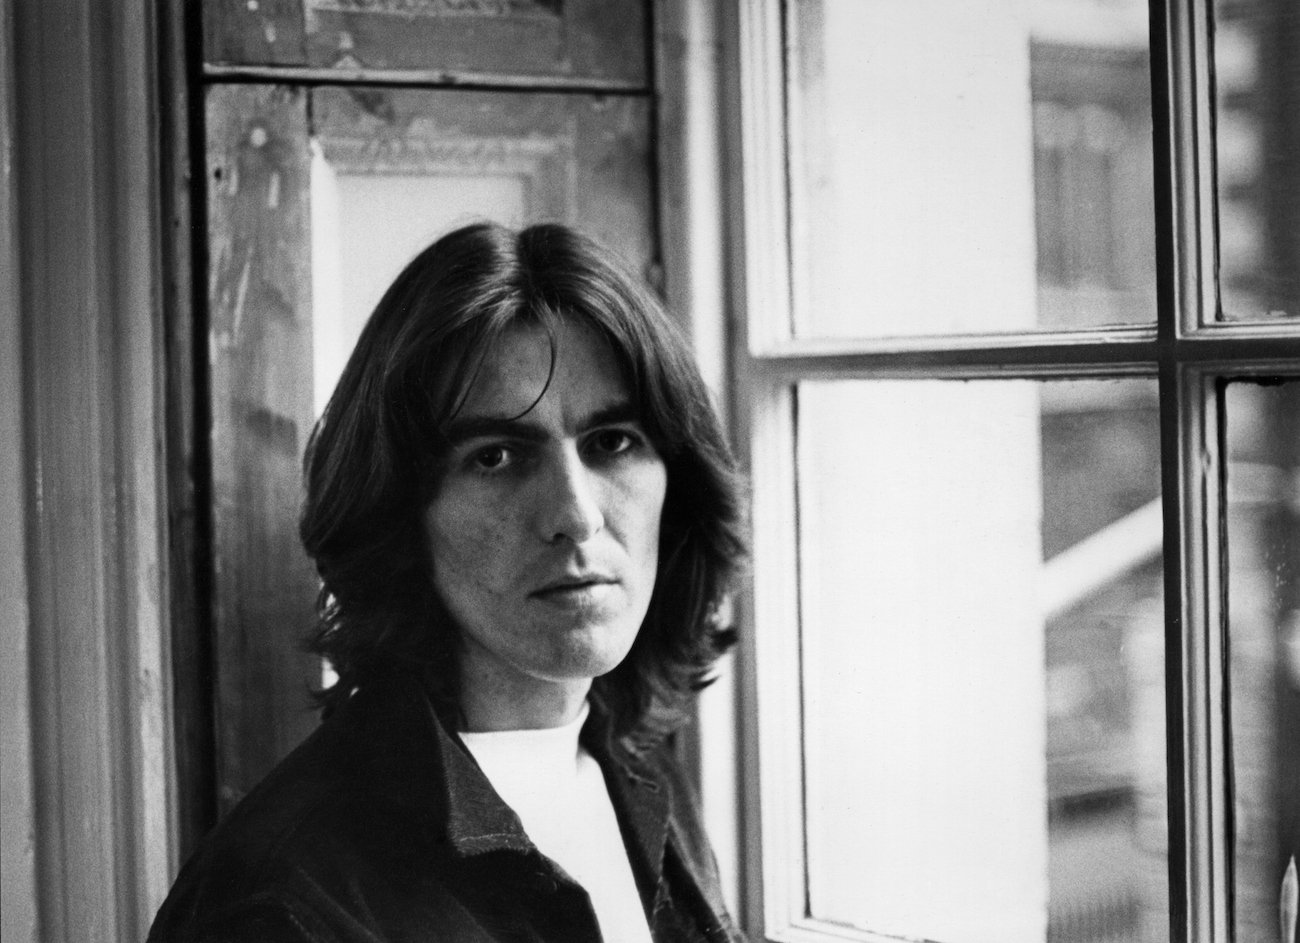 George Harrison posing for a portrait wearing a dark jacket at Apple Headquarters in London, 1969.